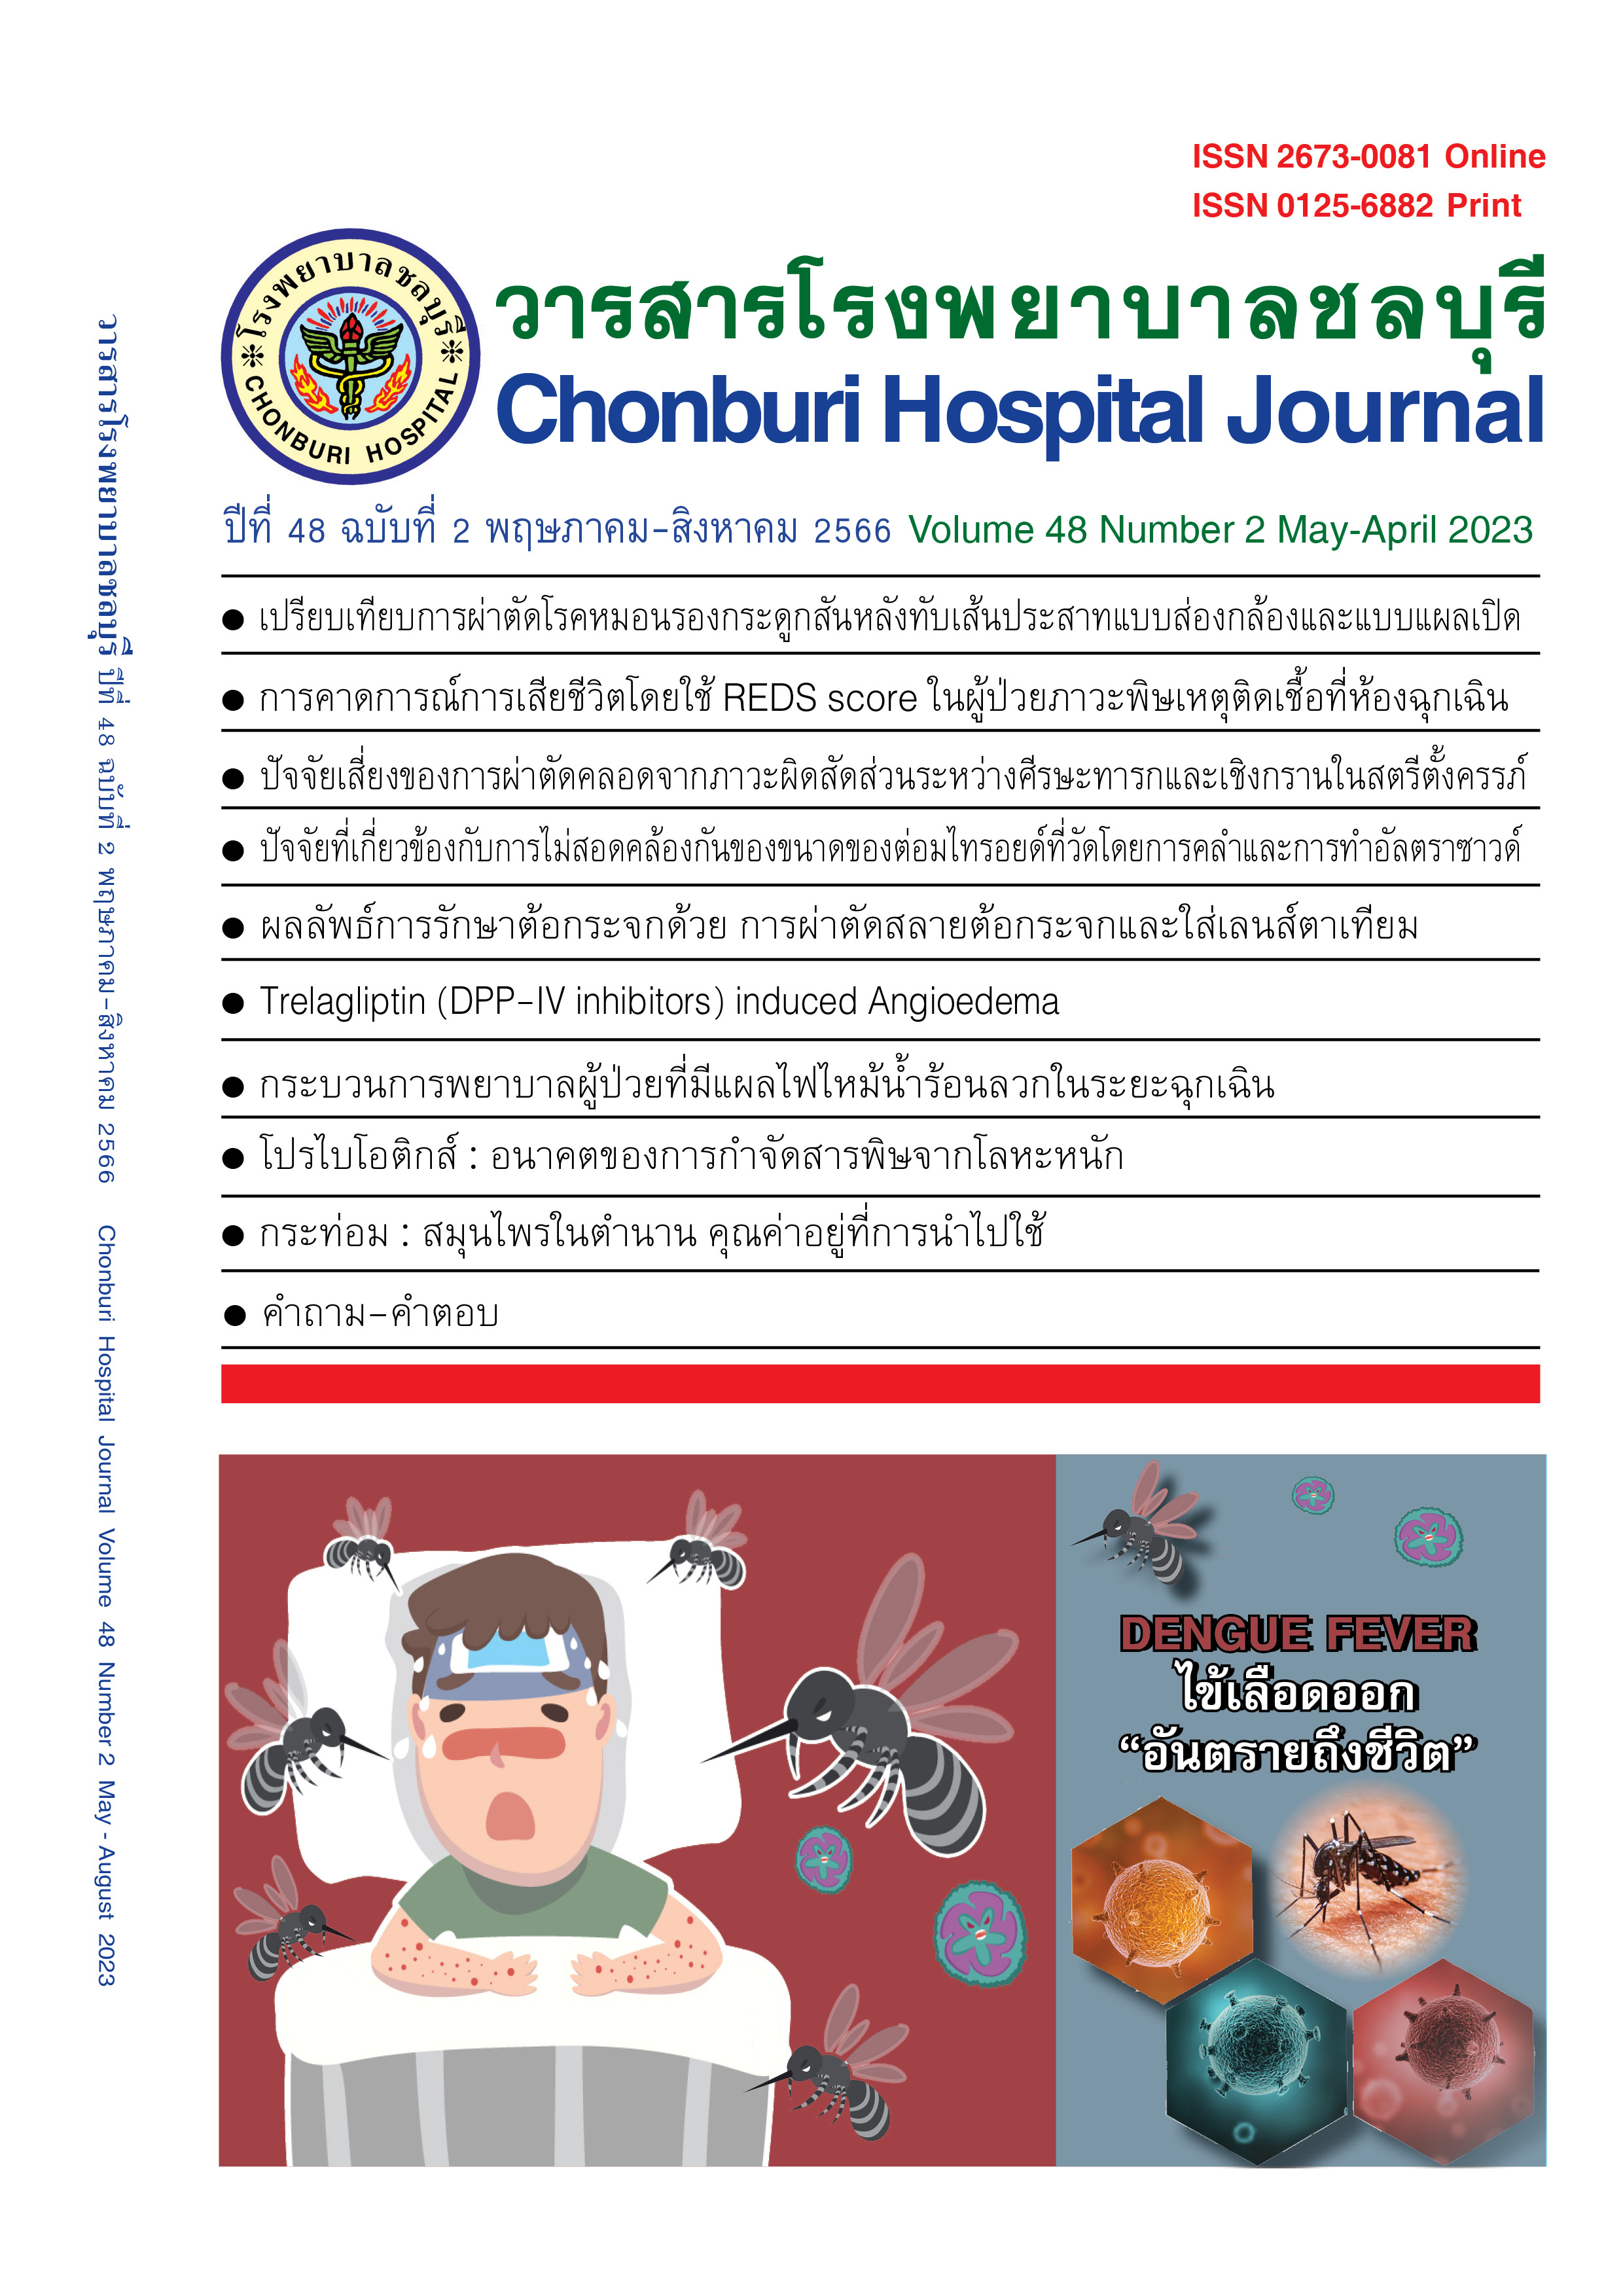 Chonburi Hospital Journal